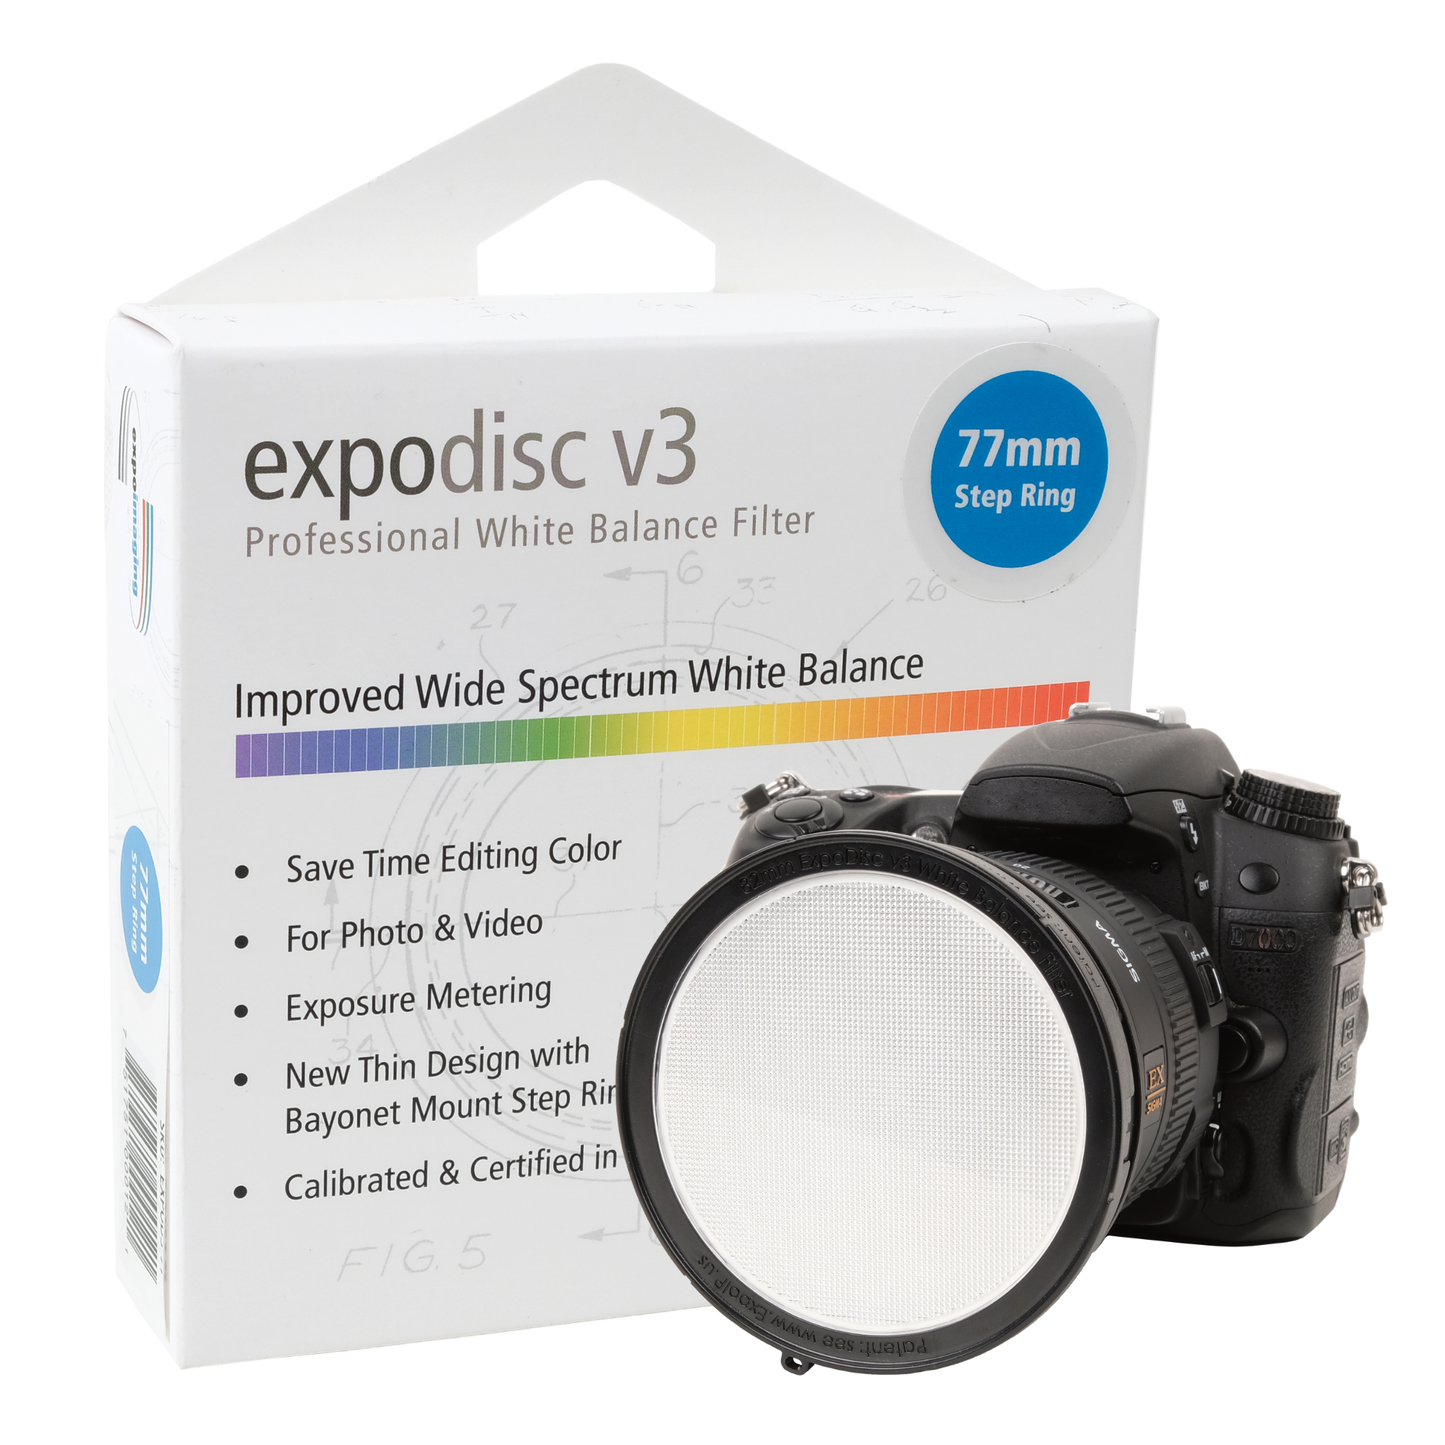 ExpoDisc v3 Professional White Balance Filter